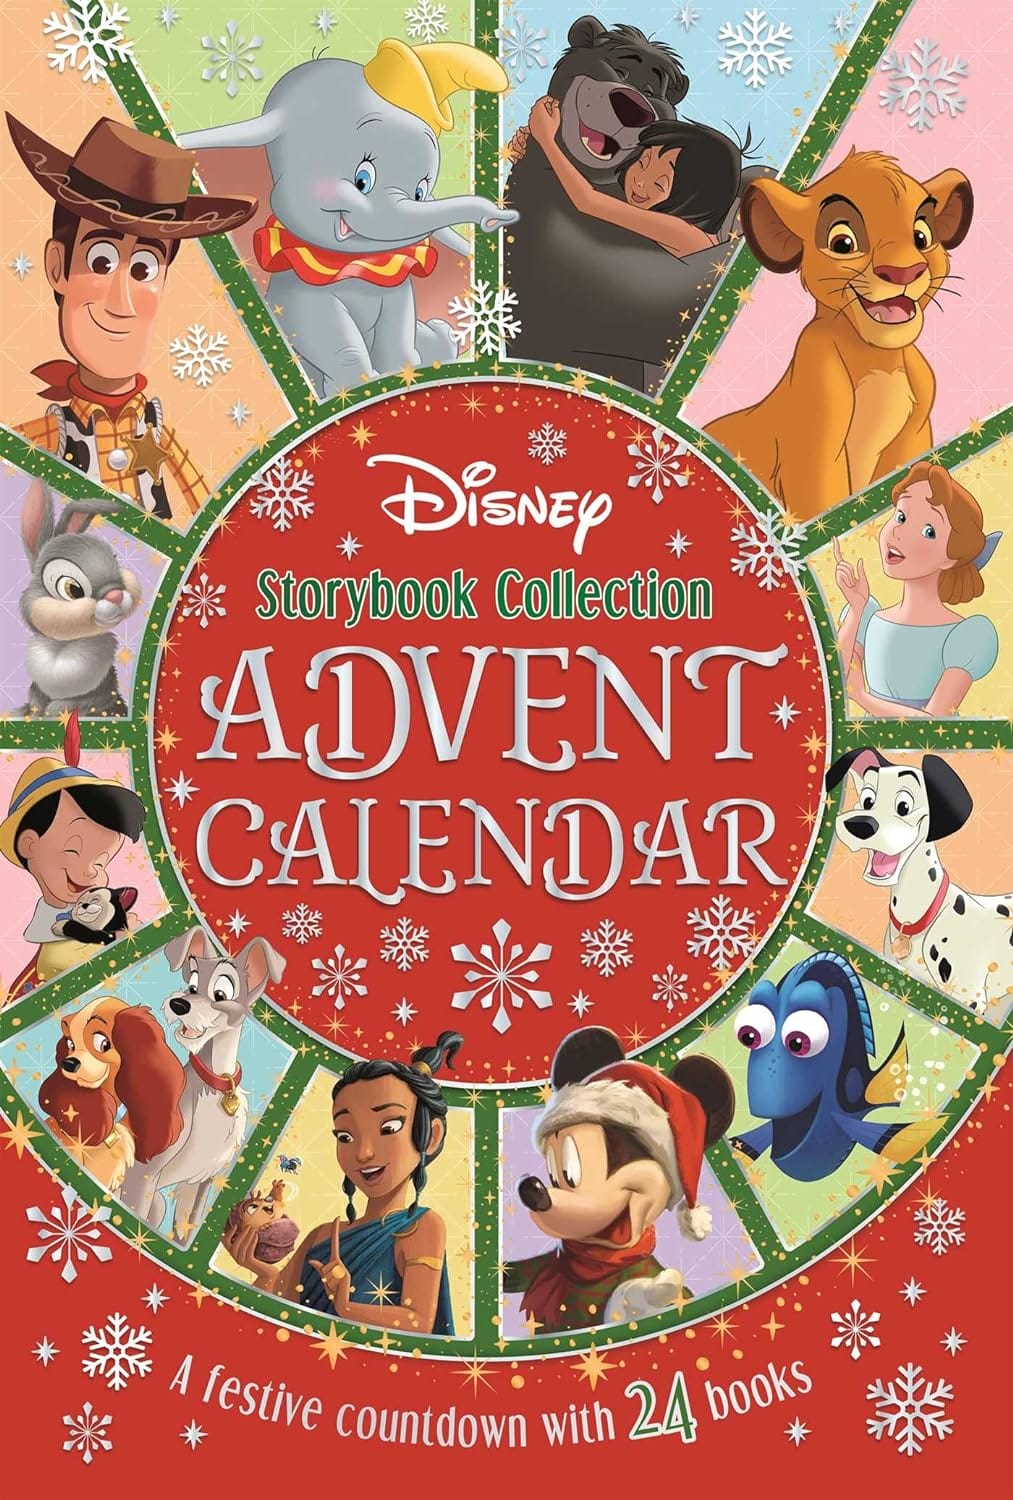 Disney Storybook Collection Advent Calendar: A Festive Countdown